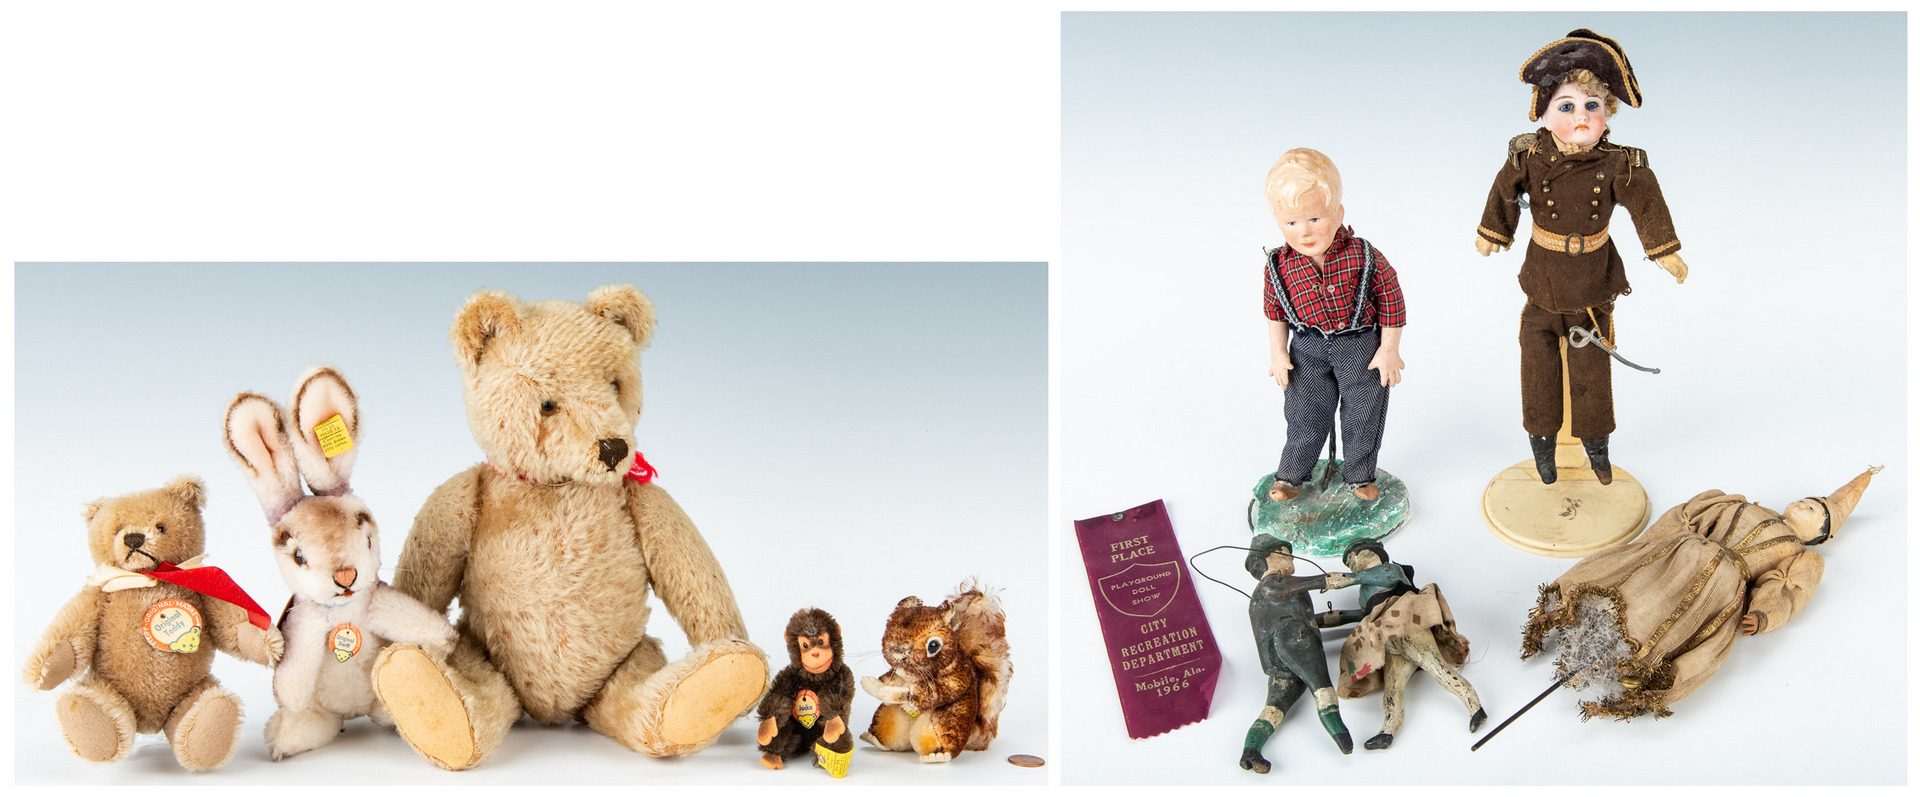 Lot 423: Group of 9 Vintage Toys, Stuffed Animals & Dolls